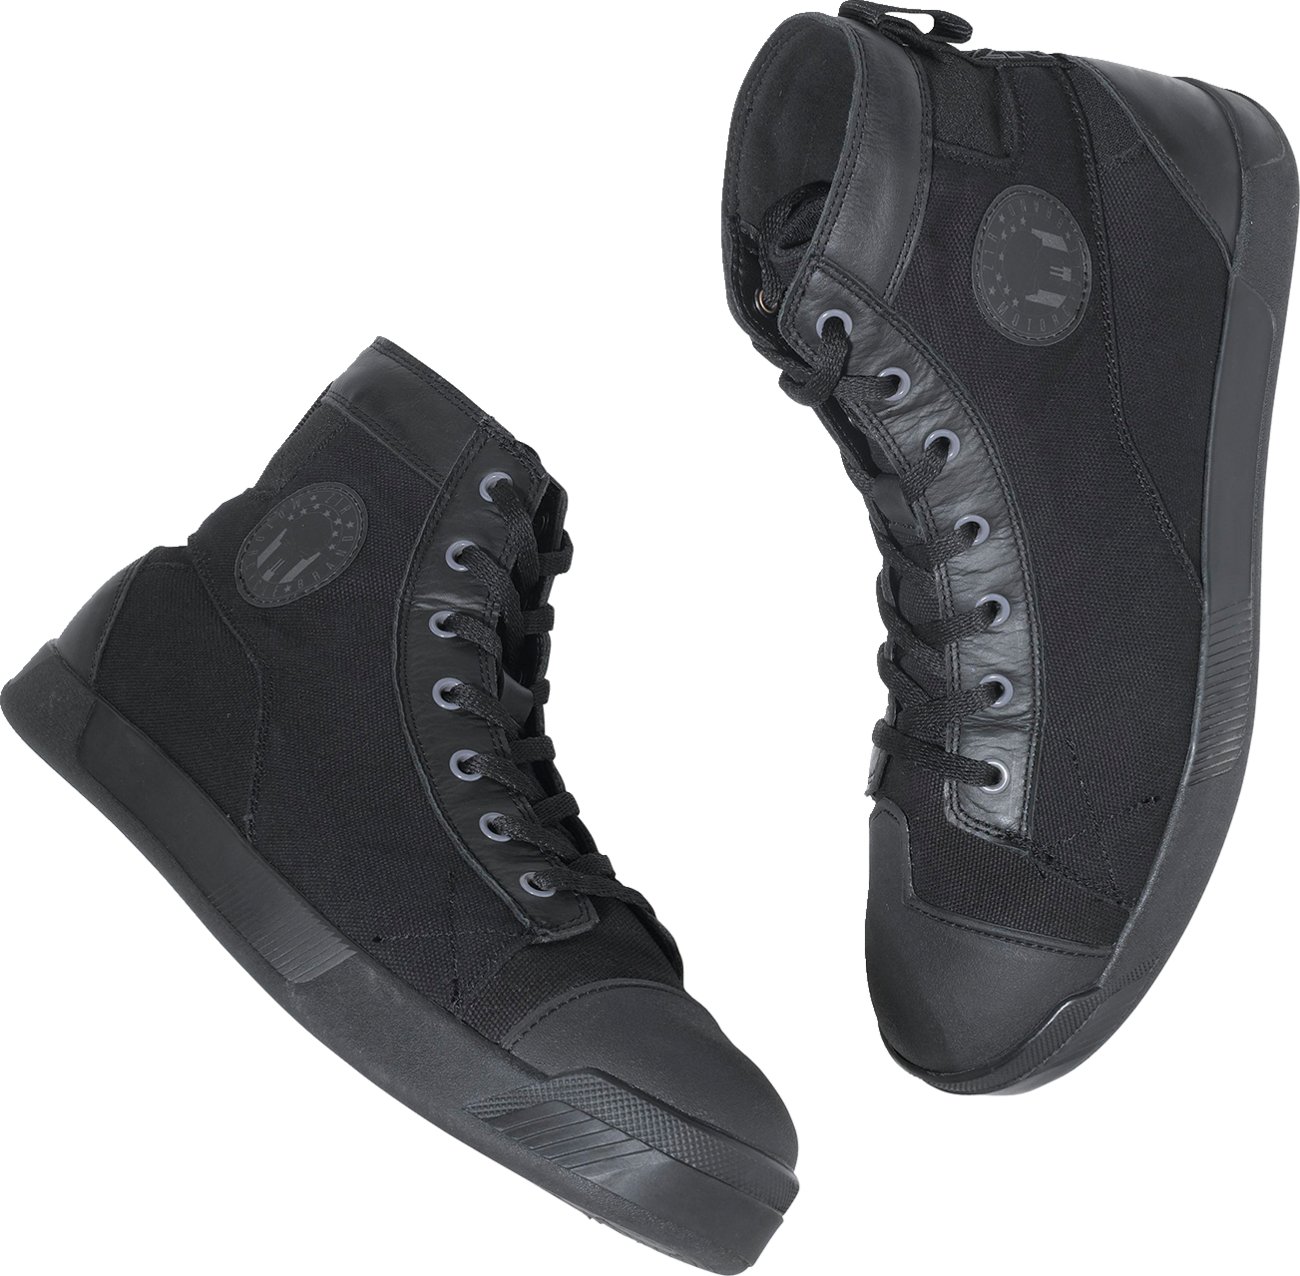 Z1R Haggard Boots - Black - US 10.5 3401-0958